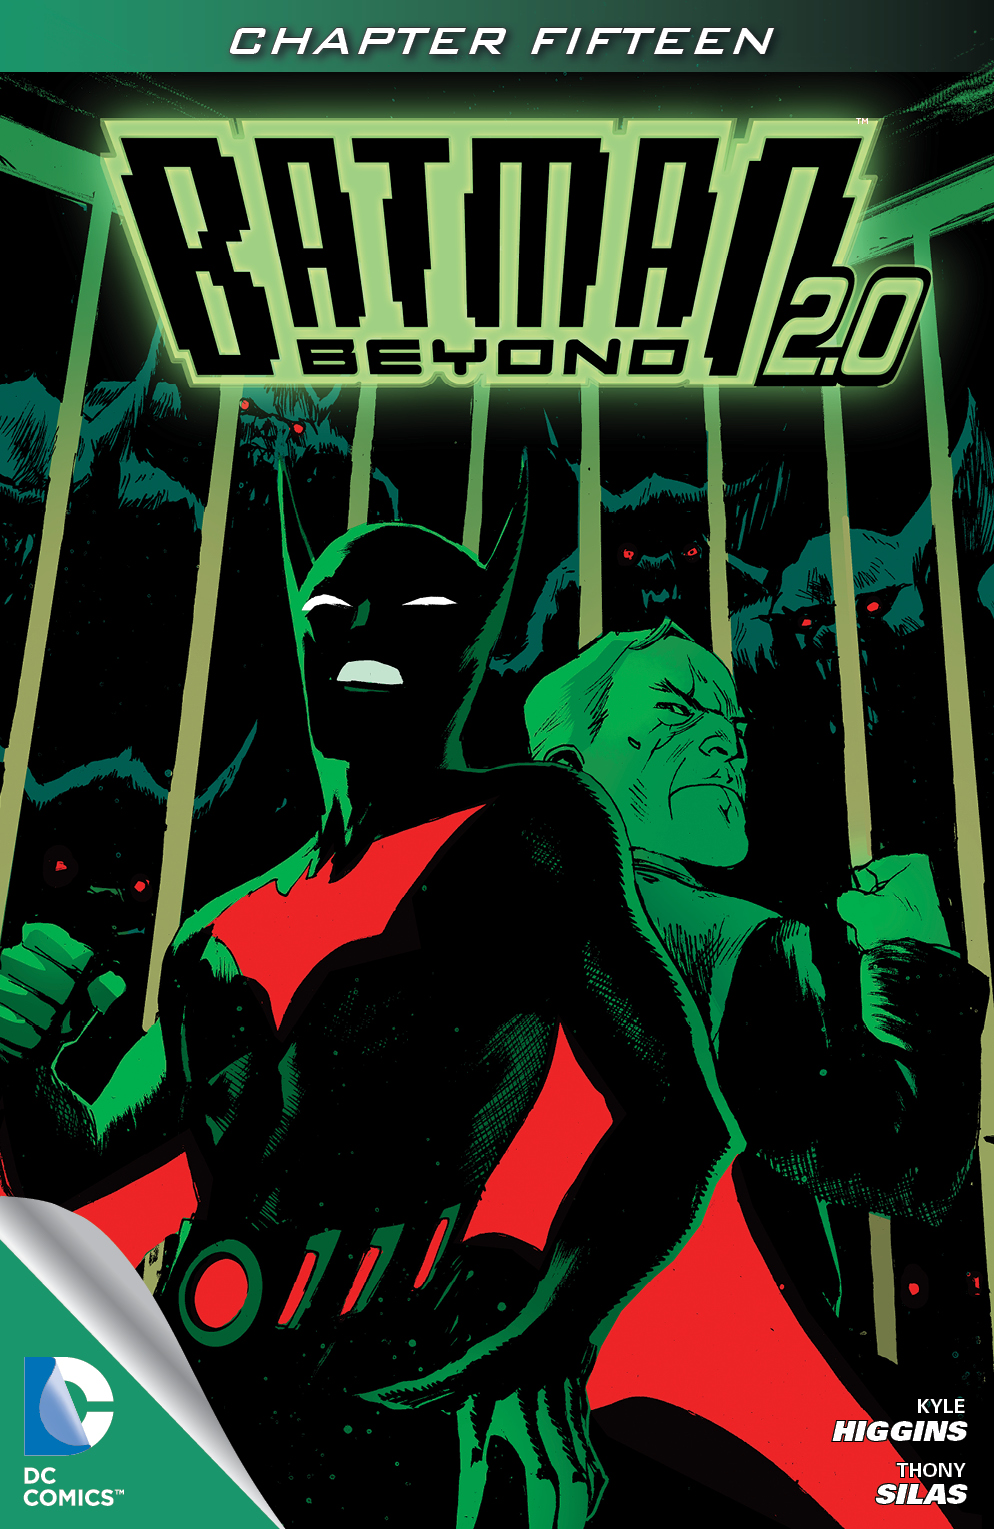 Batman Beyond 2.0 #15 preview images